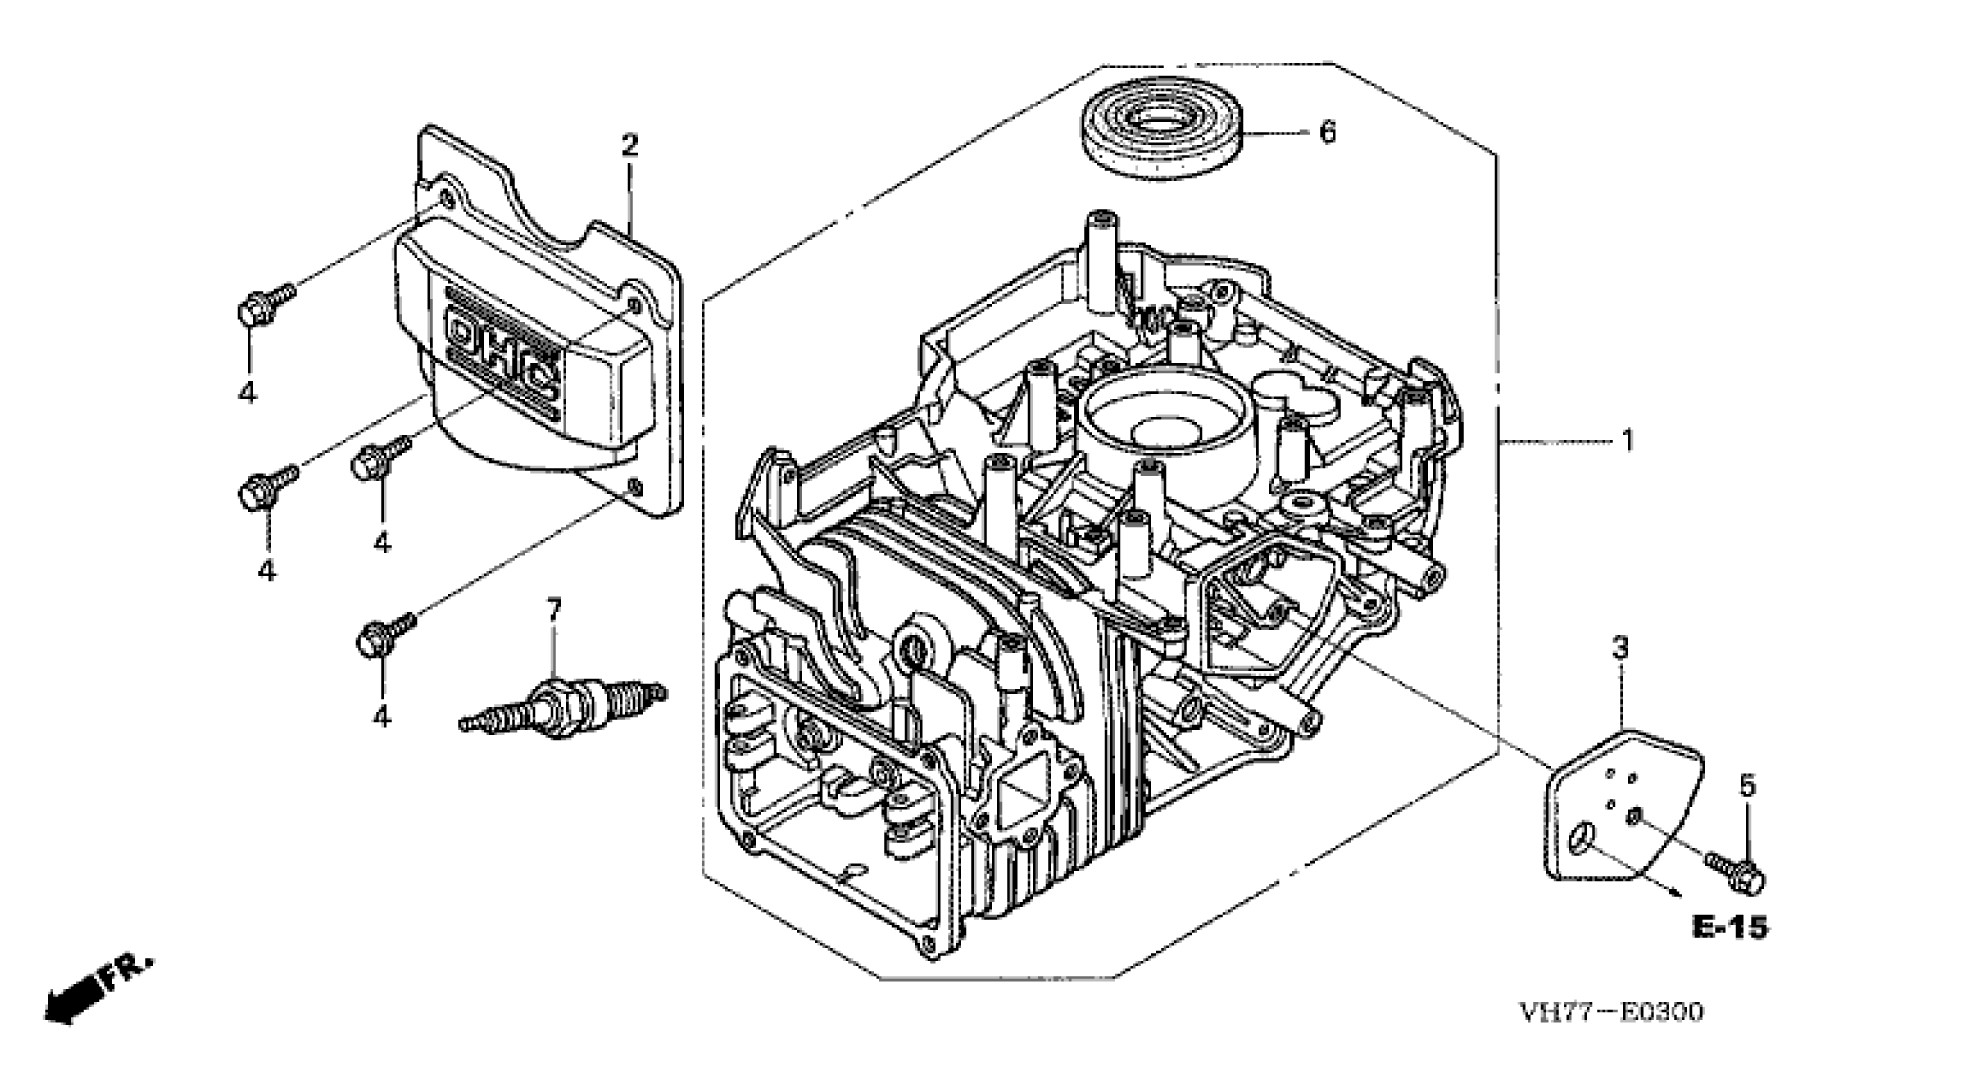 Honda Hrx217 Parts Diagram Honda Hrx 217 Mower